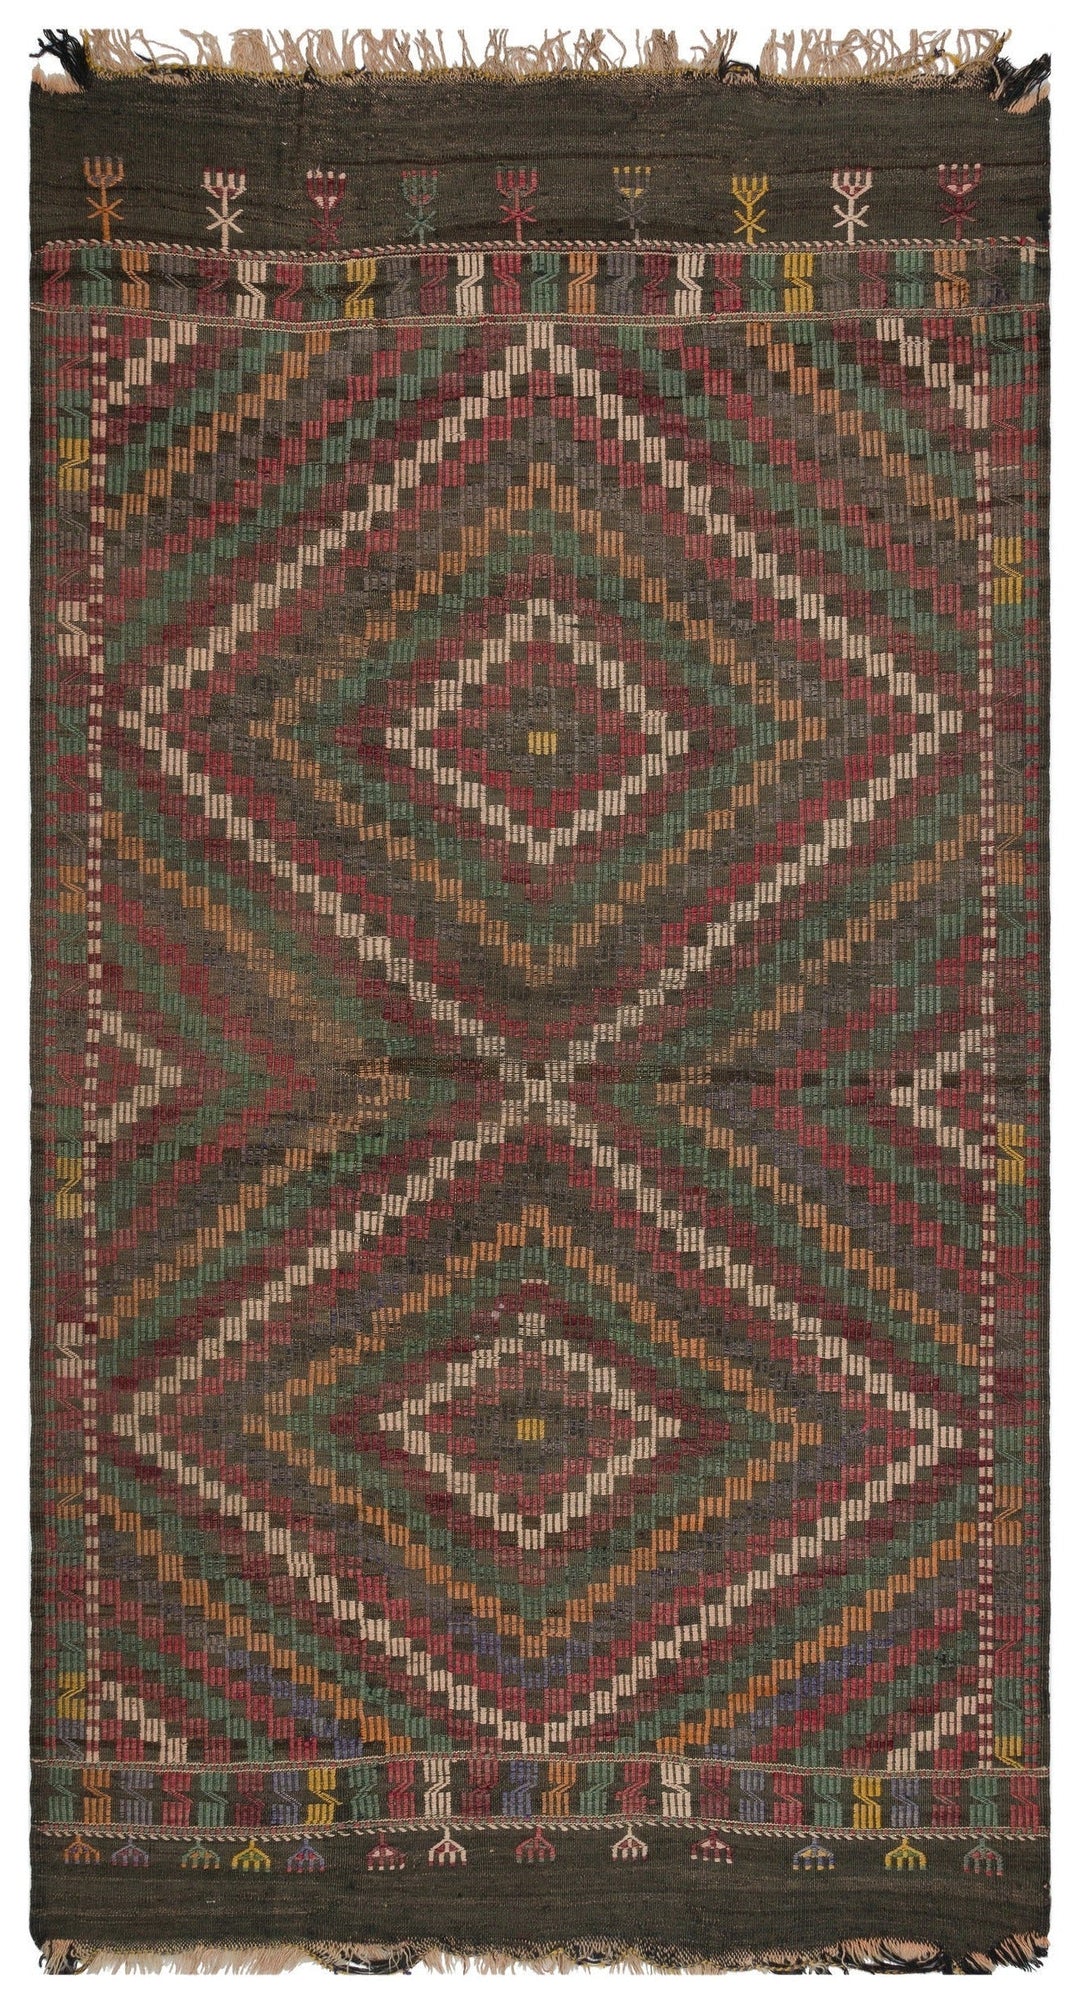 Cretan Beige Striped Wool Hand-Woven Carpet 158 x 290